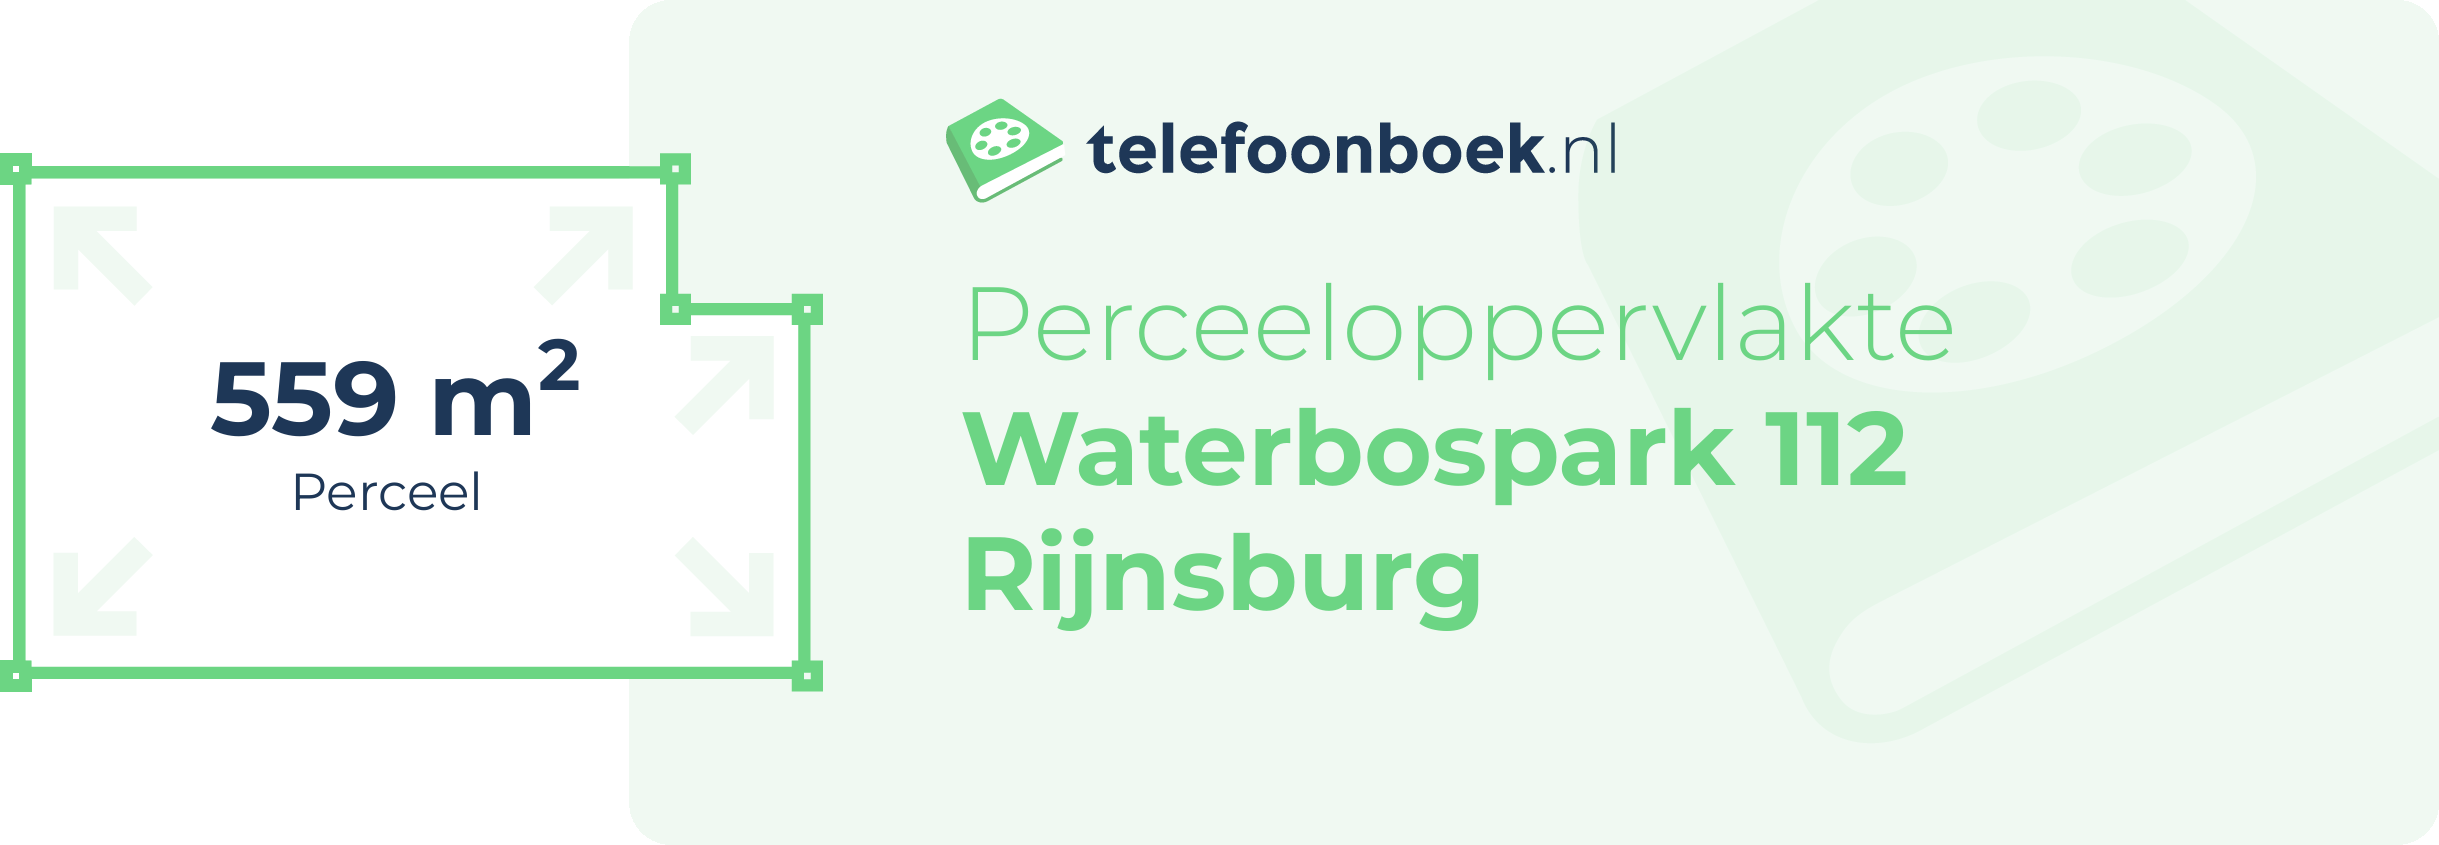 Perceeloppervlakte Waterbospark 112 Rijnsburg